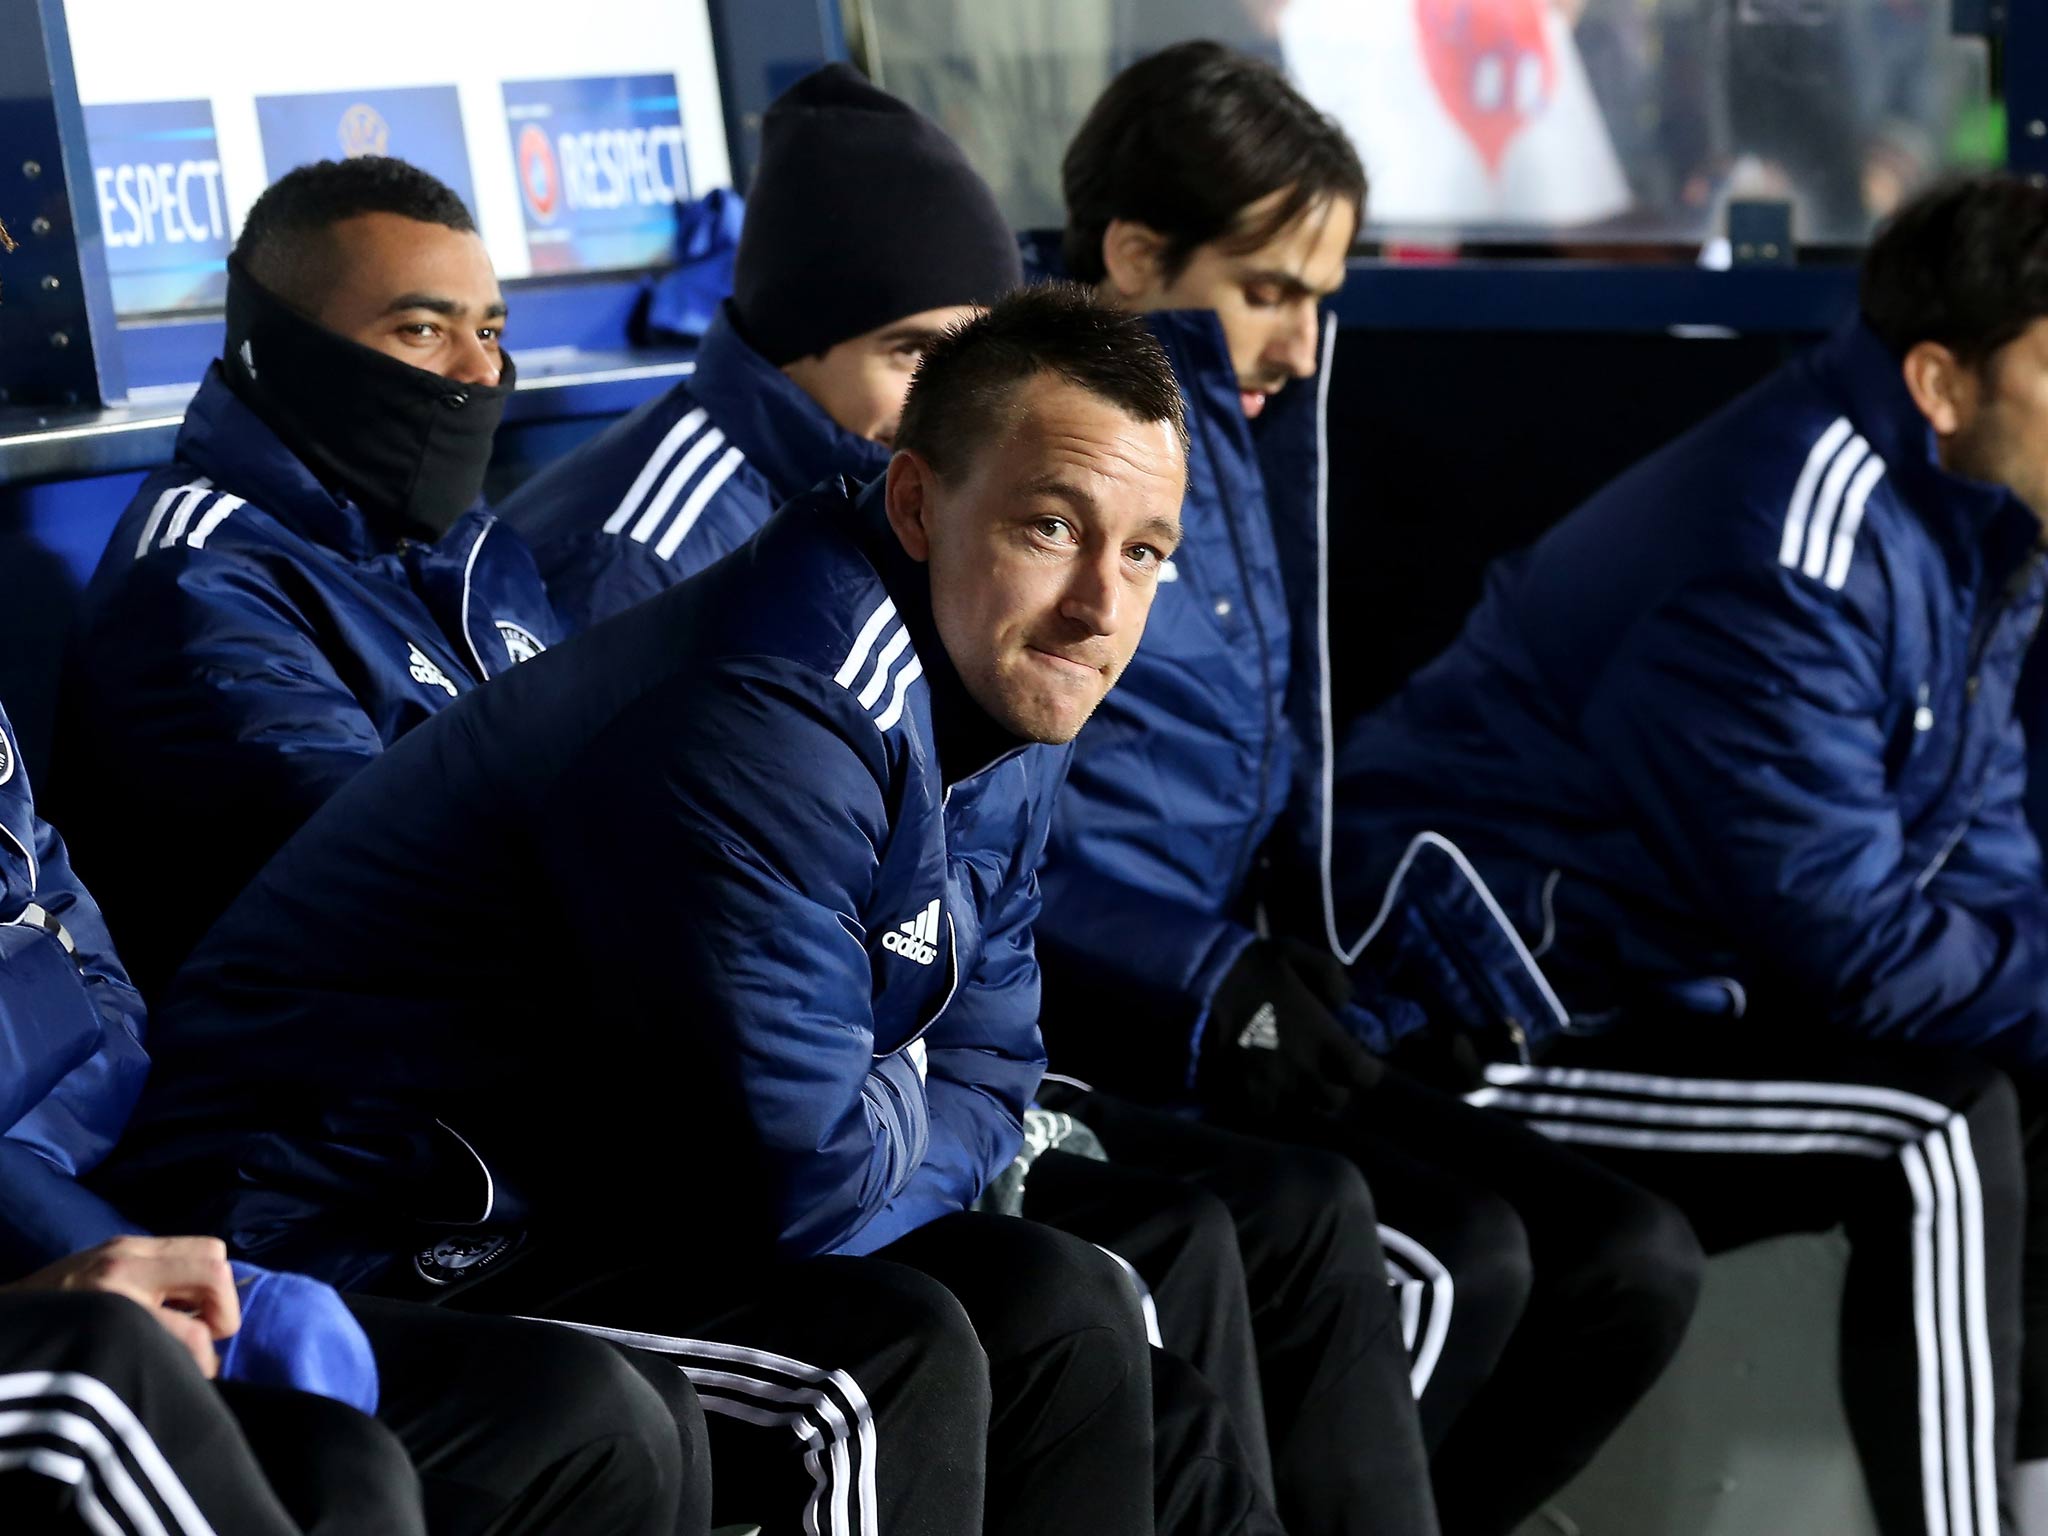 Chelsea captain John Terry on the bench